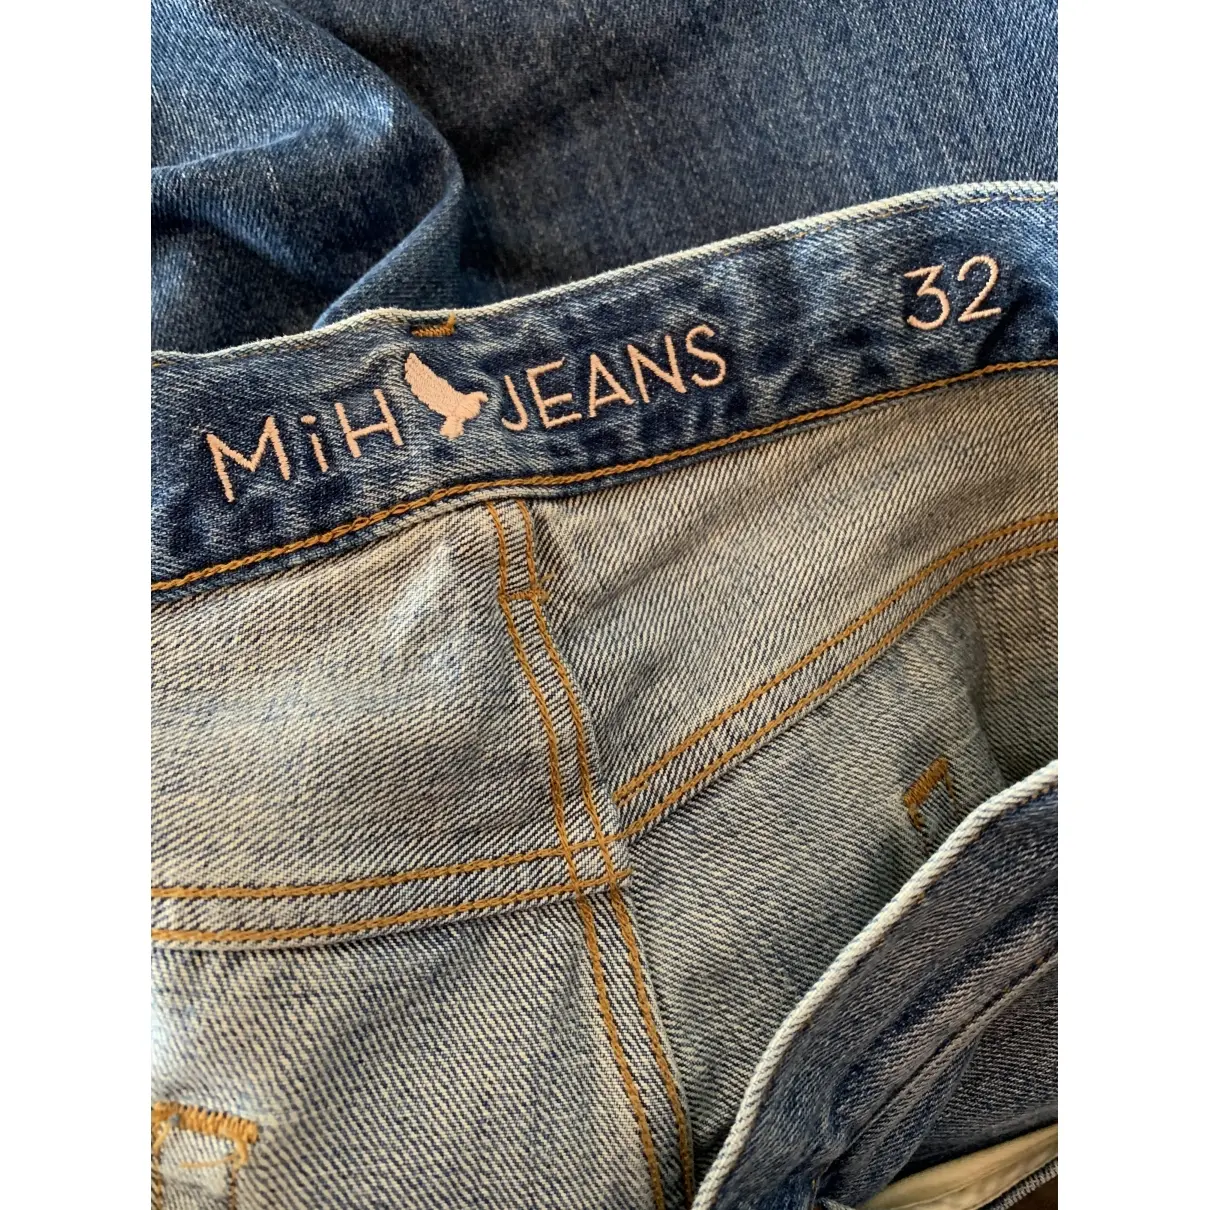 Buy Mih Jeans Blue Cotton Jeans online